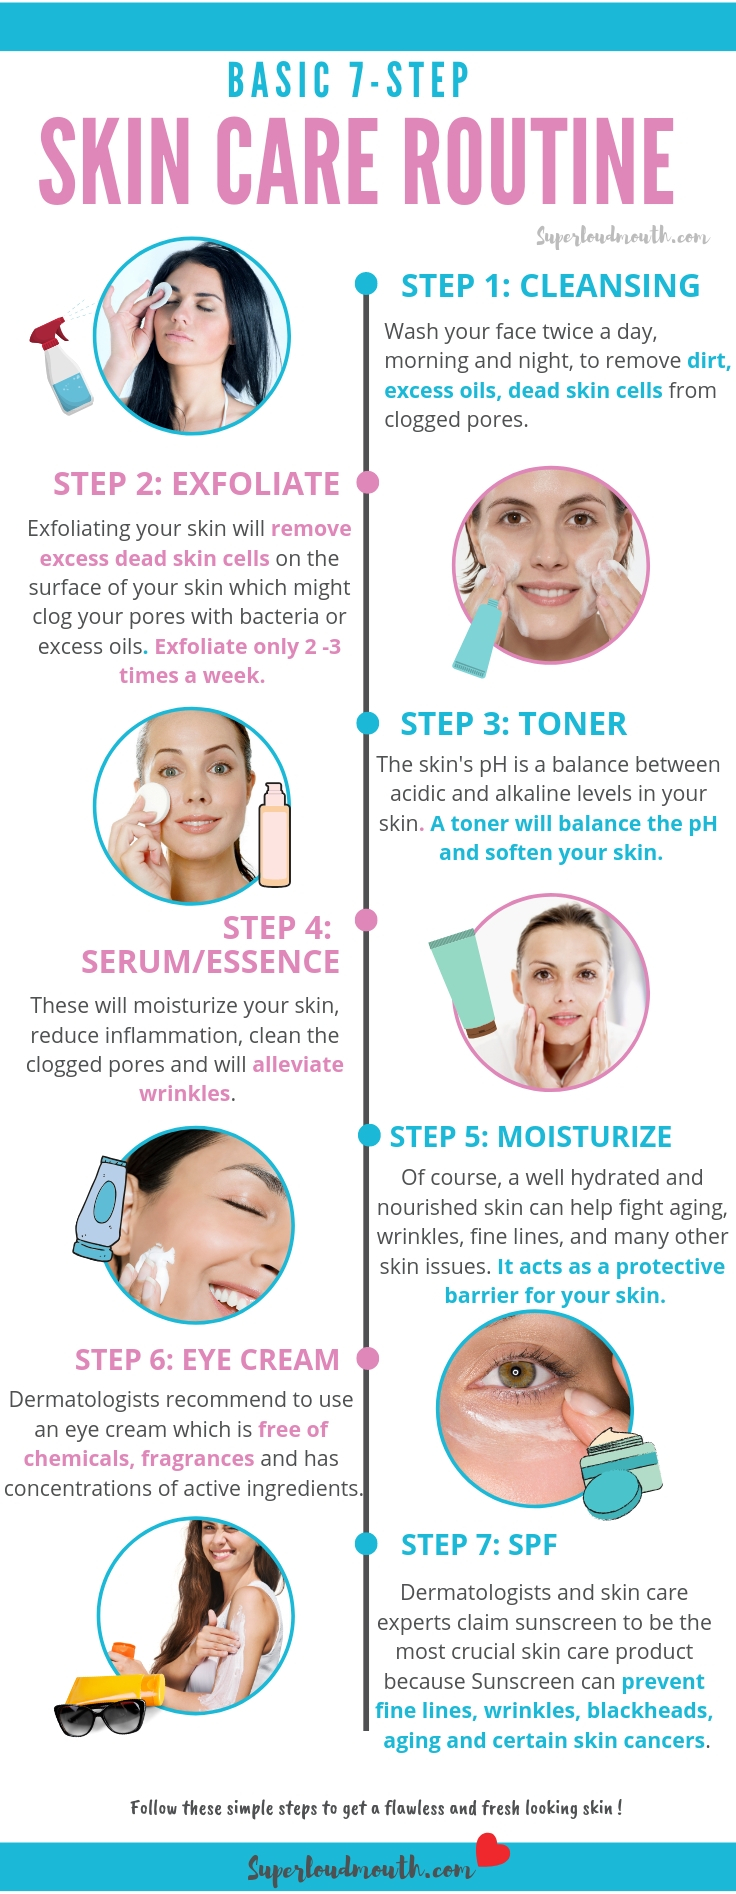 7 step basic skin care routine